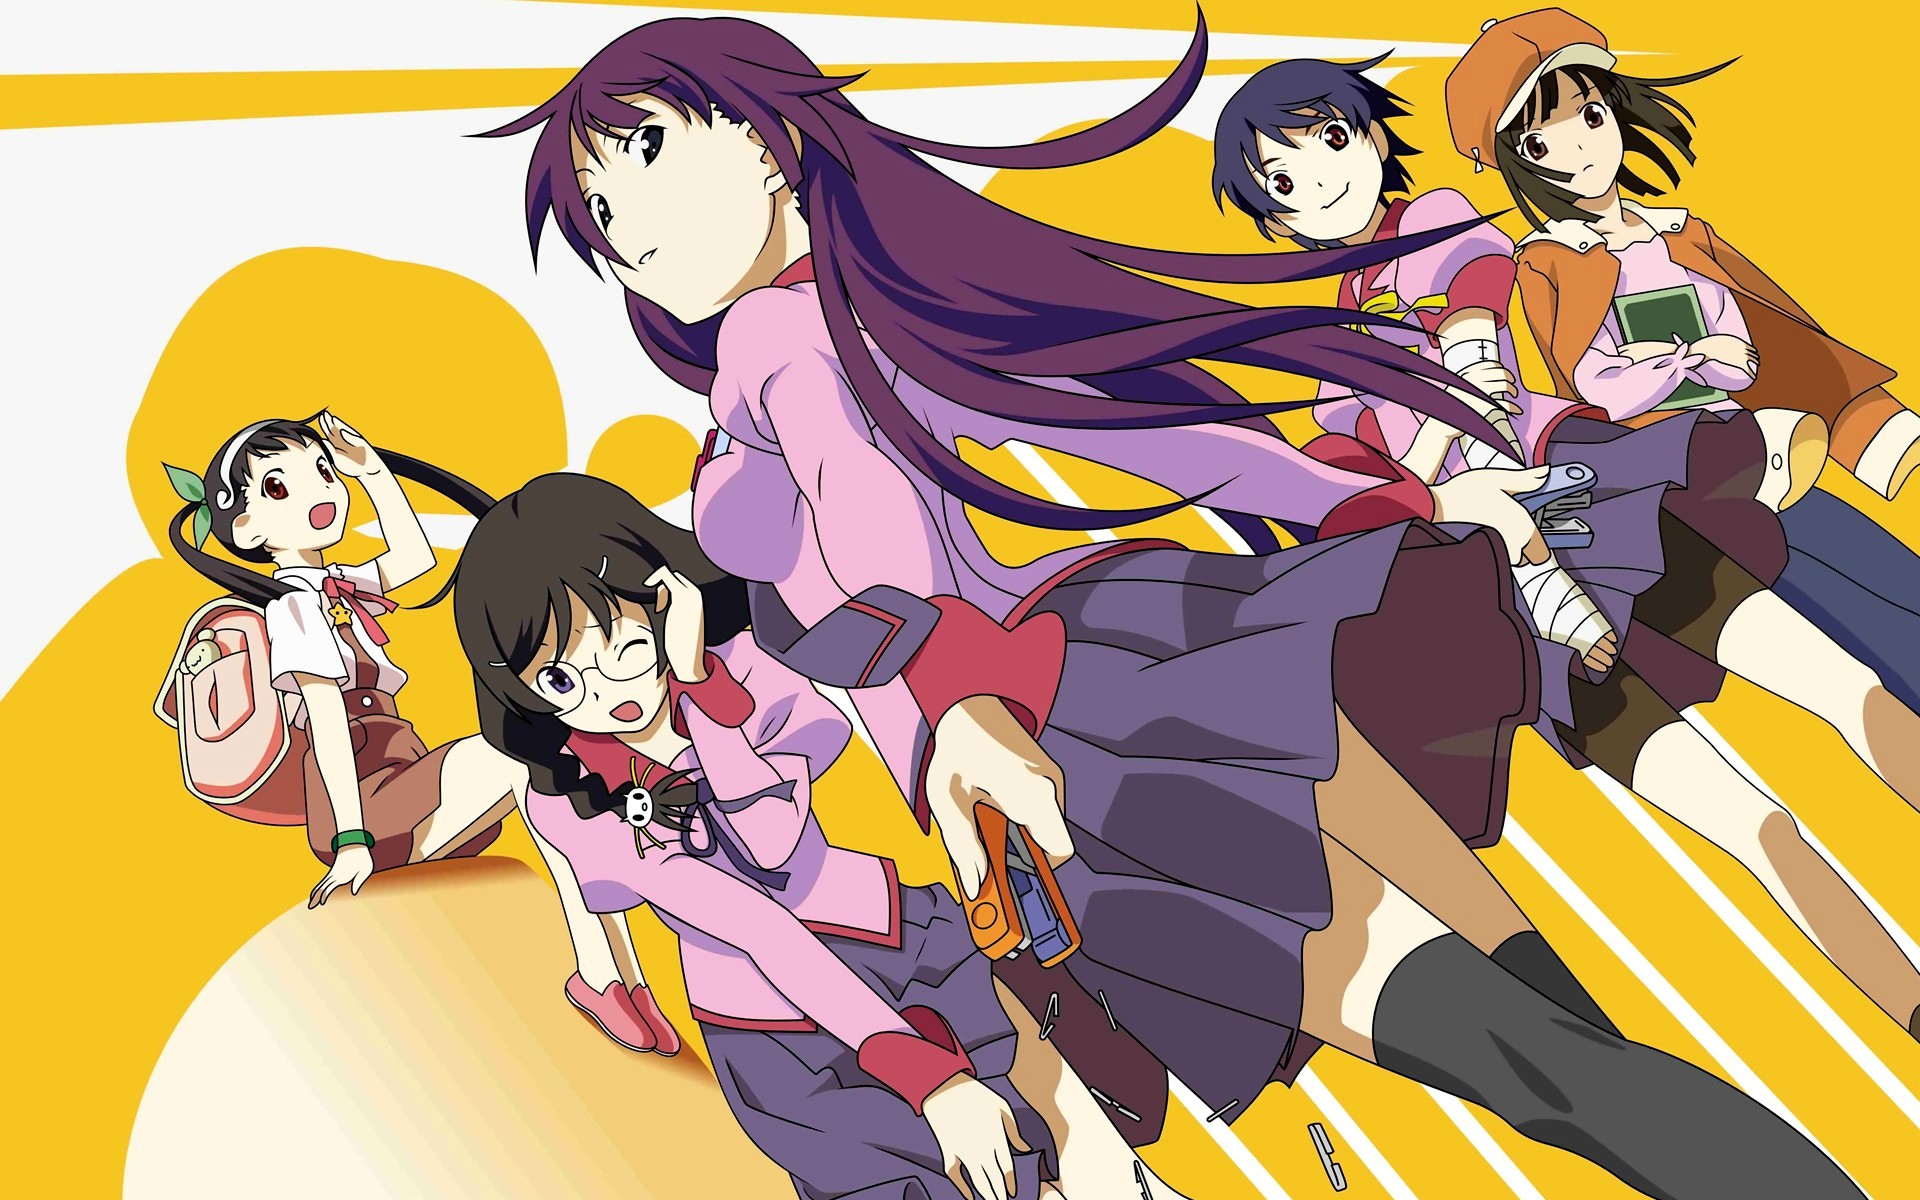 Collage of characters from the Monogatari series - Anime wallpaper with Hitagi Senjōgahara, Mayoi Hachikuji, Tsubasa Hanekawa, Suruga Kanbaru, and Nadeko Sengoku.